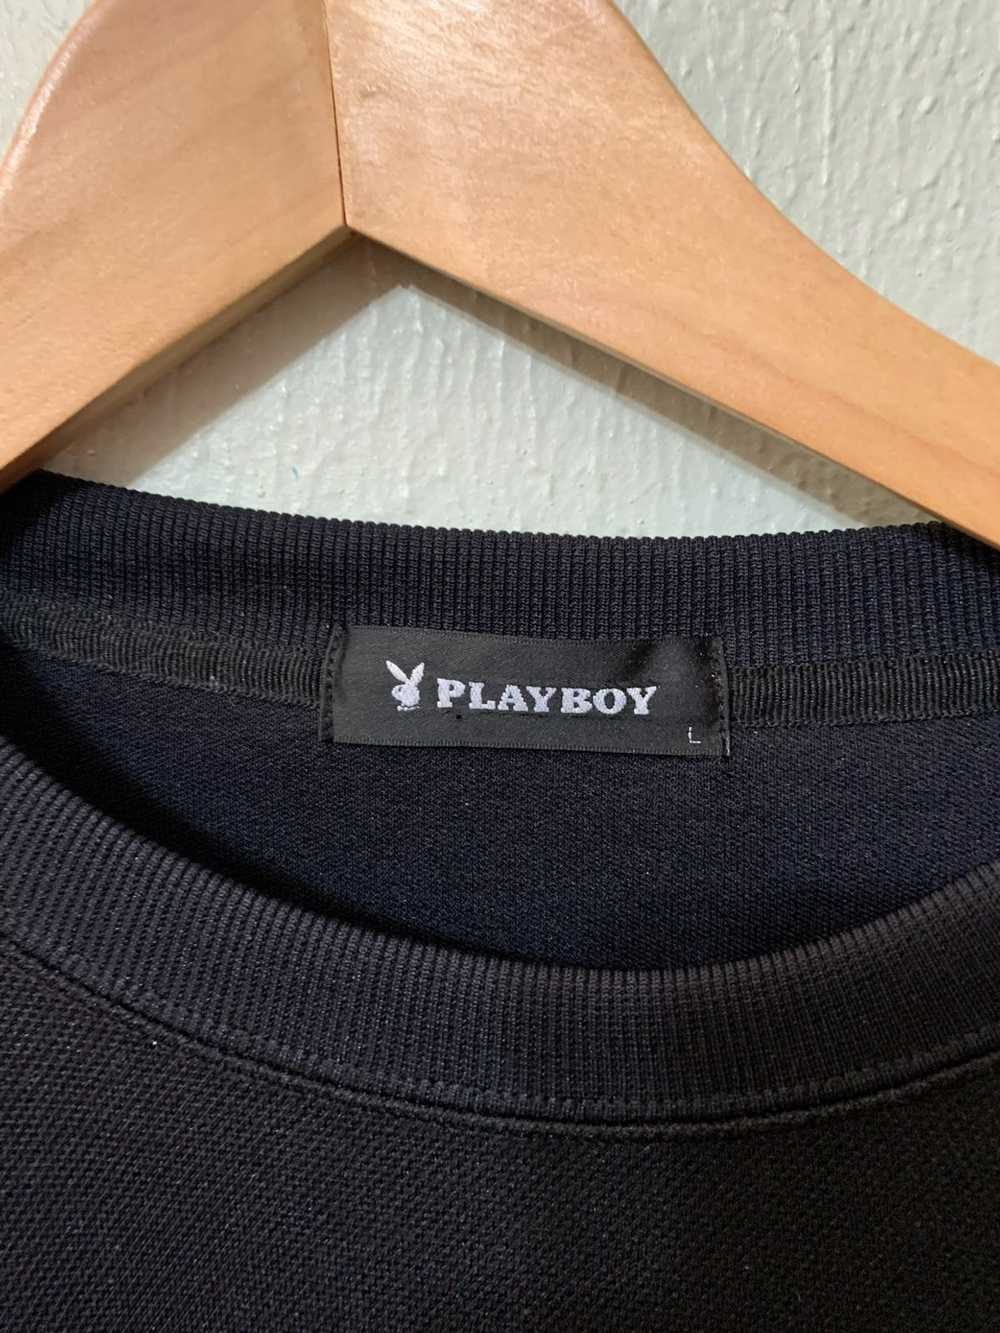 Vintage Playboy Embroided Sweatshirt - image 2